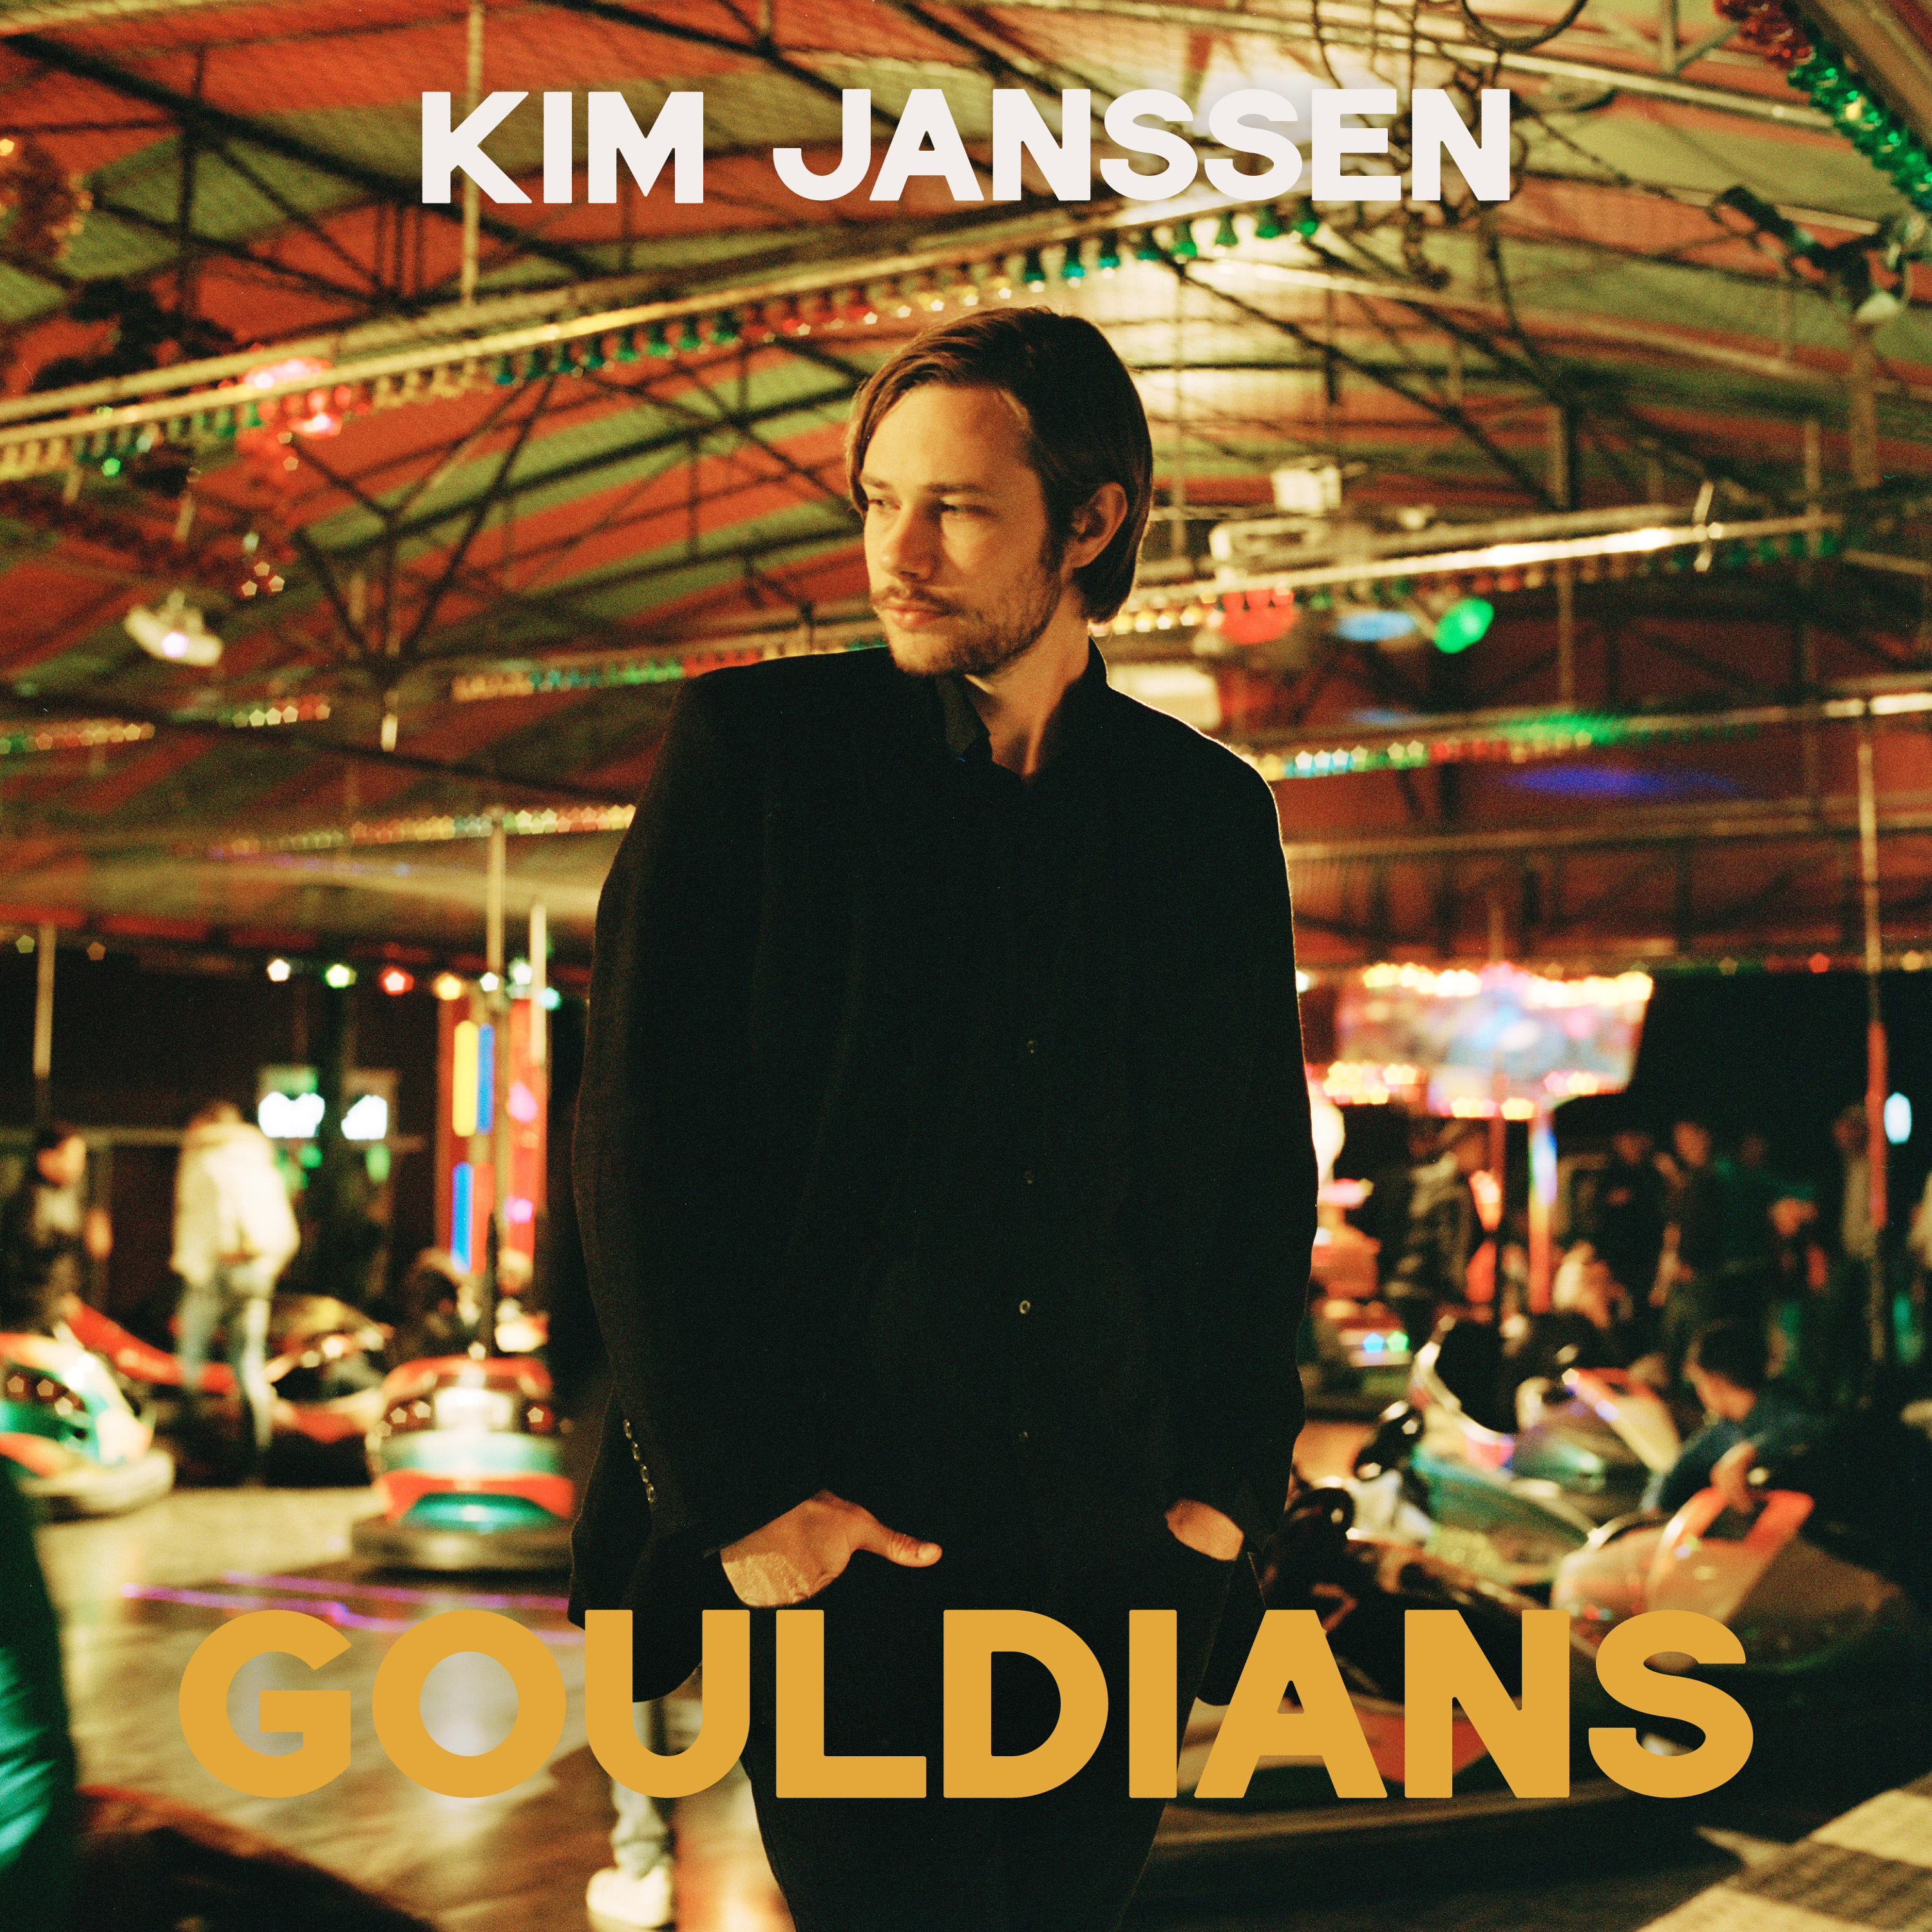 Kim Janssen - Gouldians